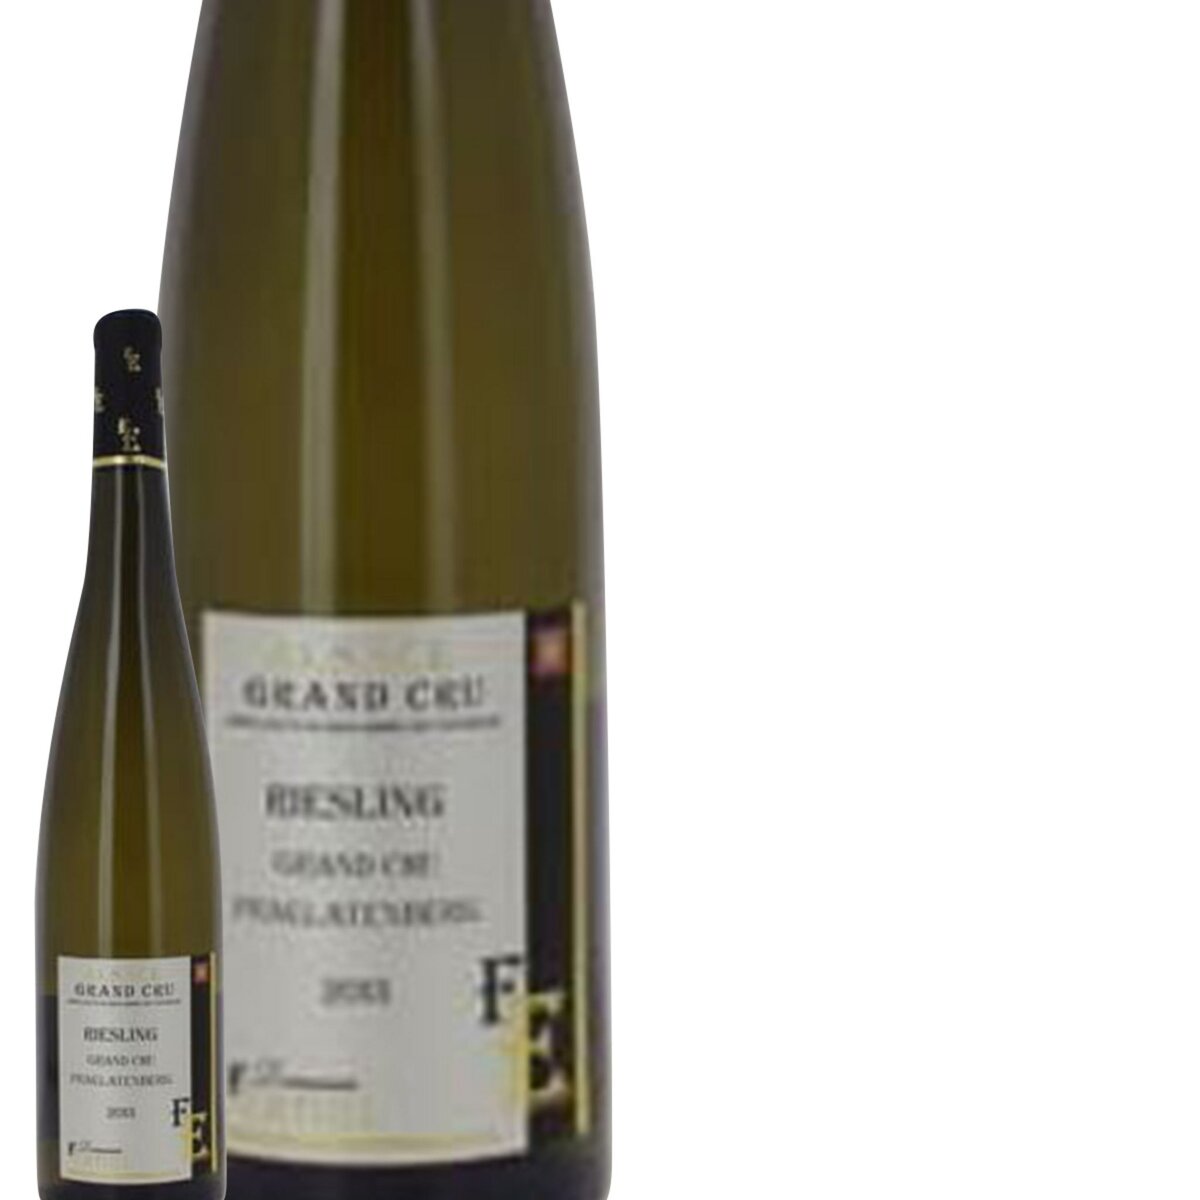 Domaine F Engel Riesling Praelatenberg Grand Cru blanc 2015